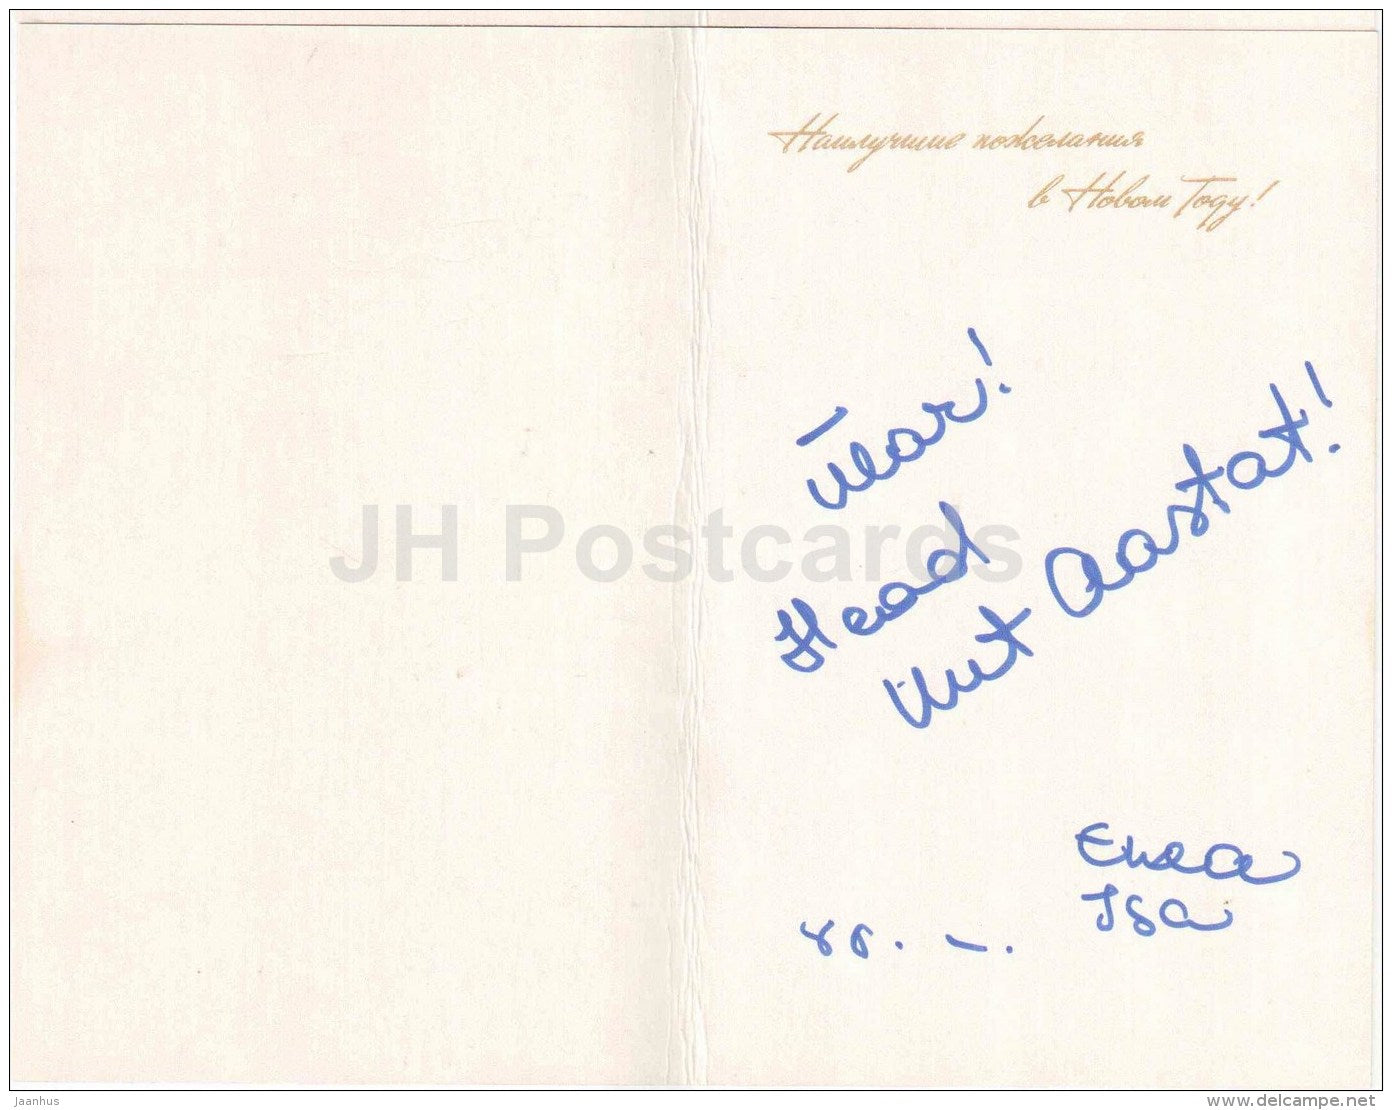 New Year greeting card by G. Kupriyanova - Ded Moroz - Santa Claus - deer - sledge - puppet - 1974 - Russia USSR - used - JH Postcards